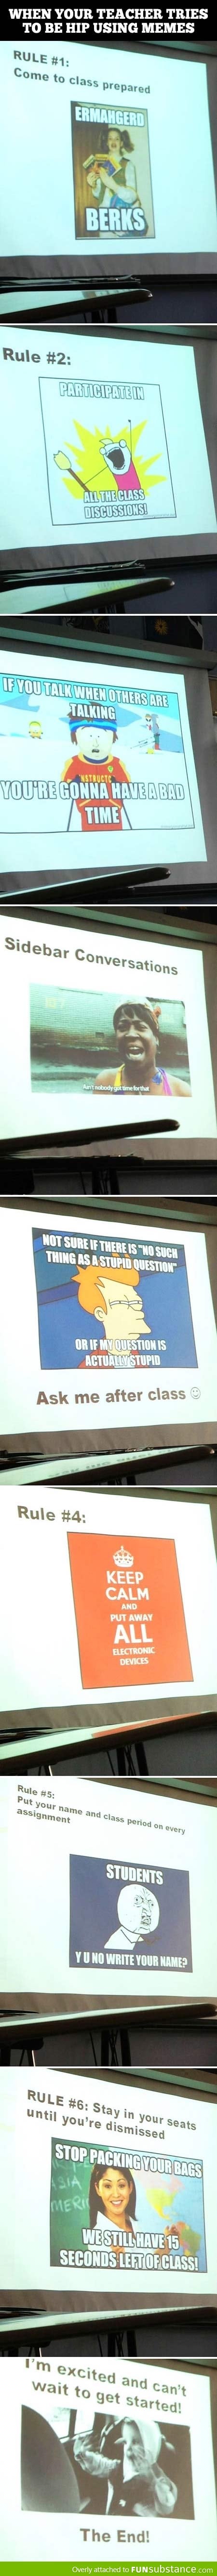 Meme in class